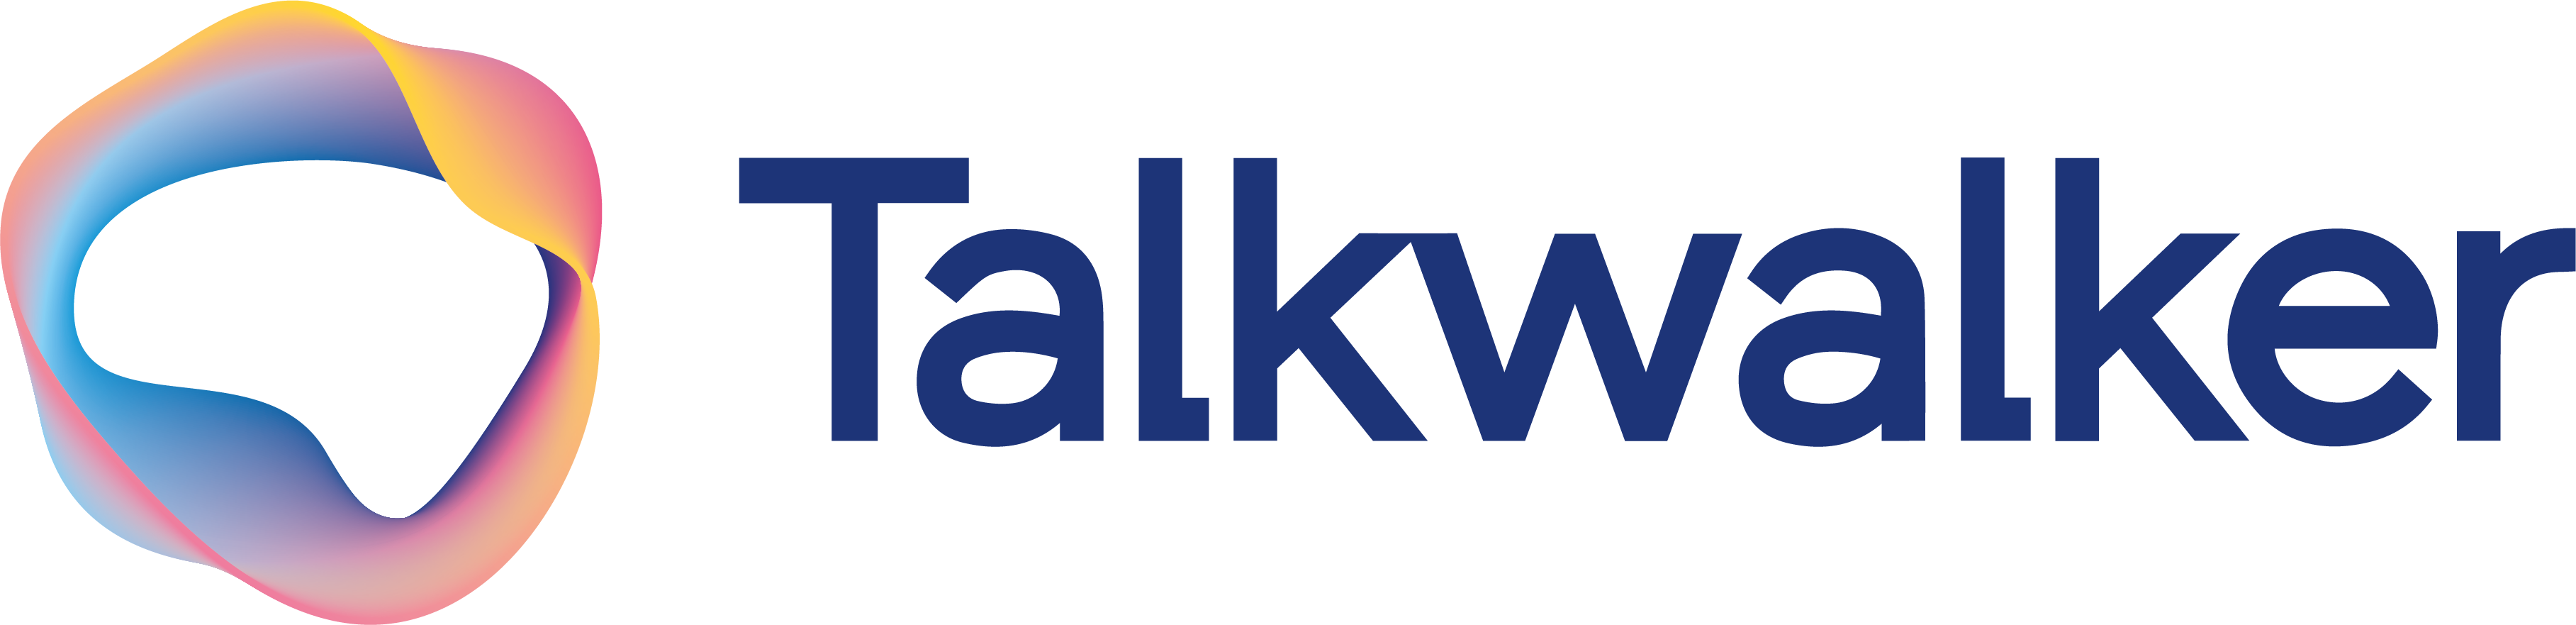 Talkwalker Logo_Full_Blue-1